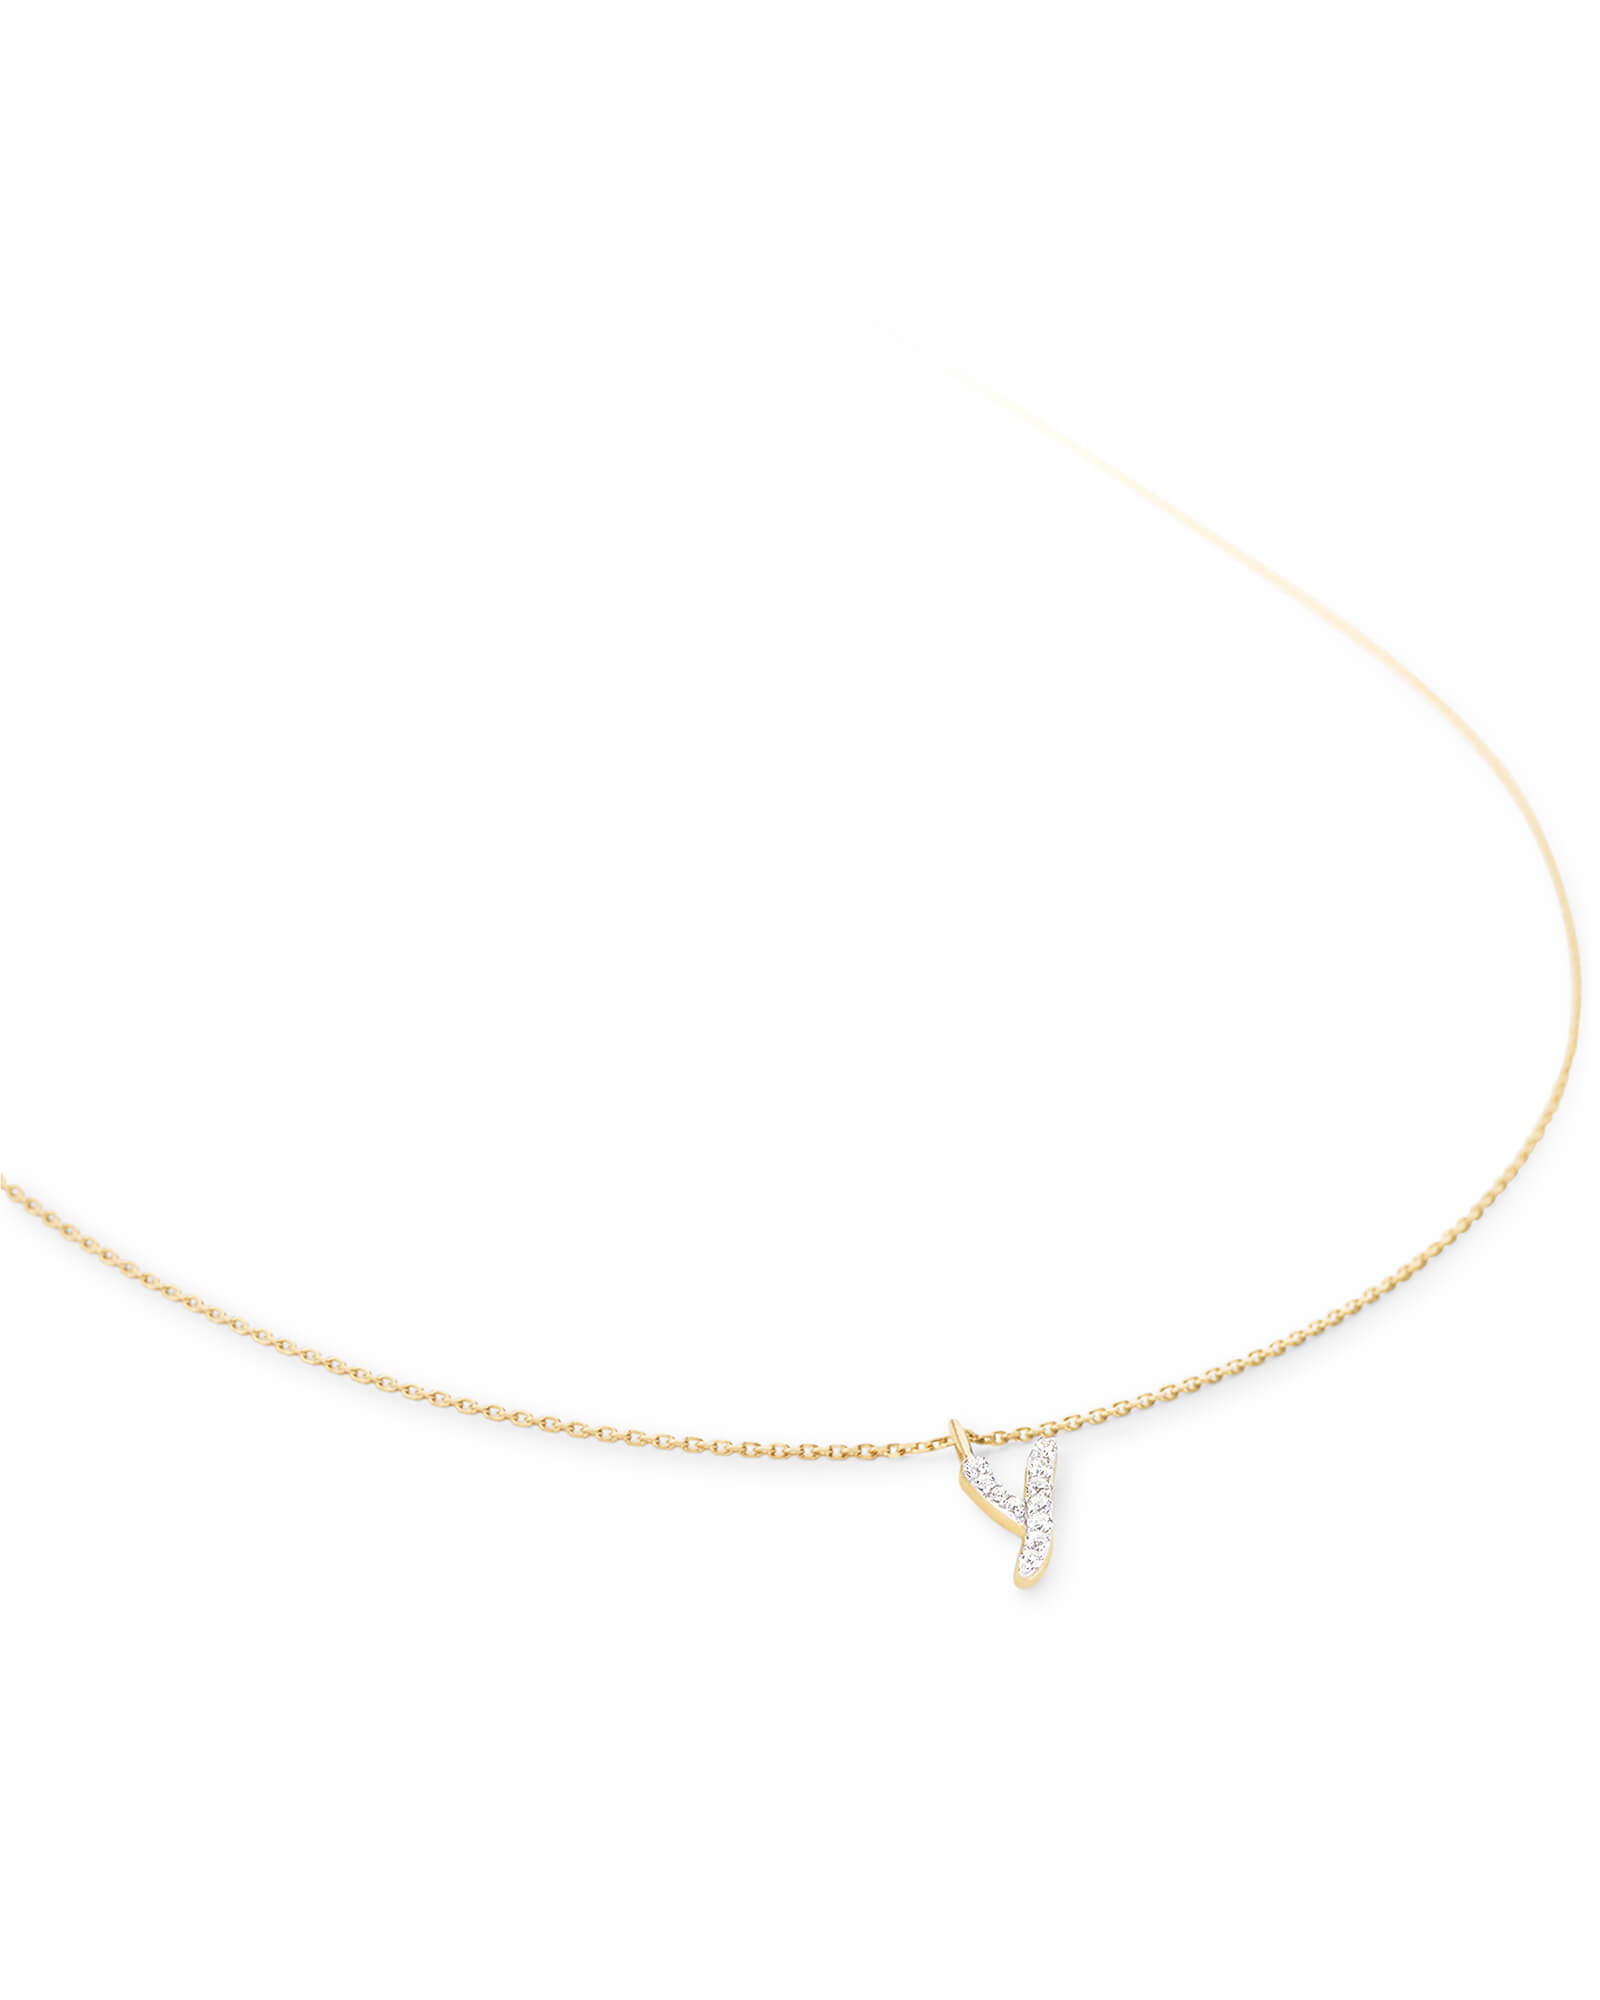 Kendra Scott Diamond Letter Y Pendant Necklace in 14k Yellow Gold | Diamonds